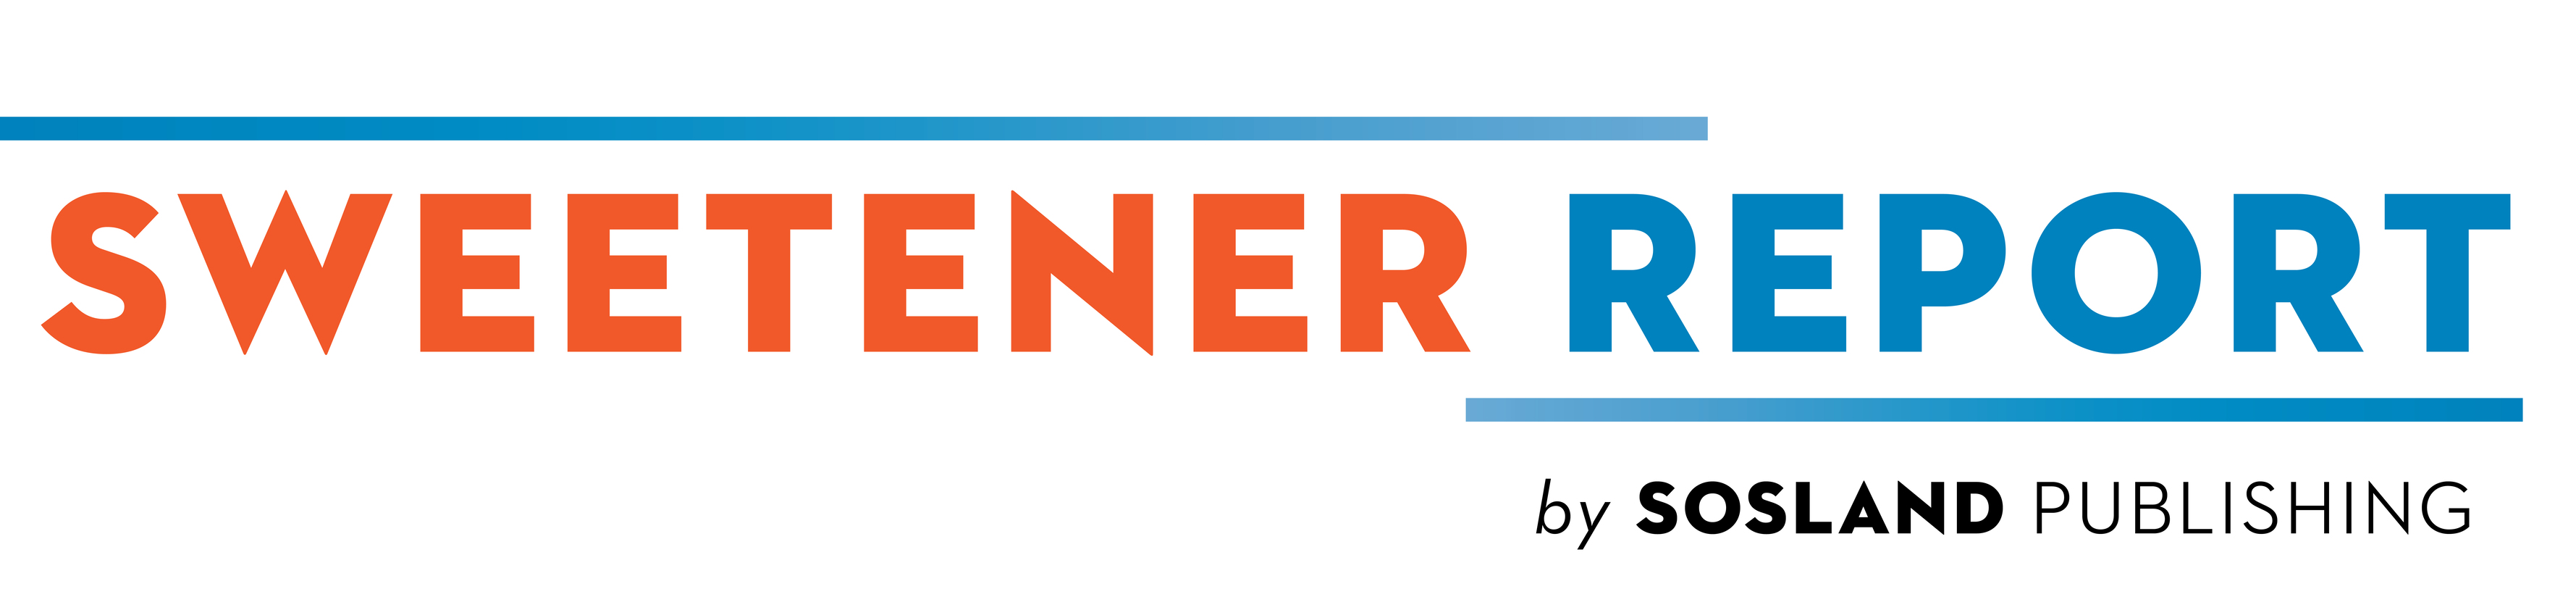 Sweetener Report Logo